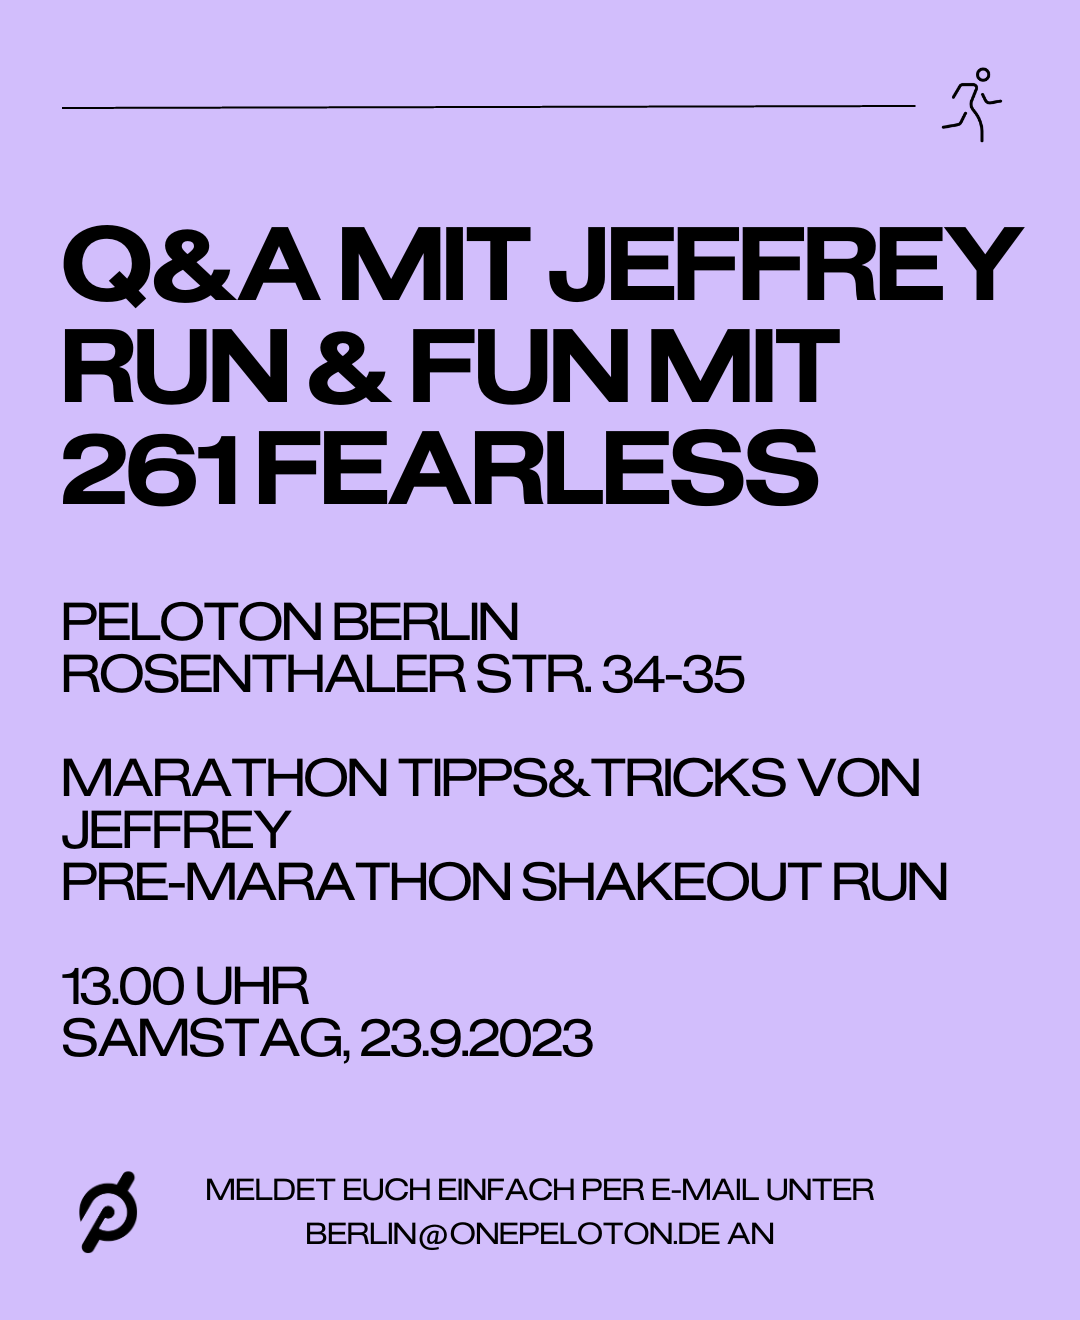 Berlin Marathon event with Jeffrey McEachern on September 23. Image credit Peloton social media.